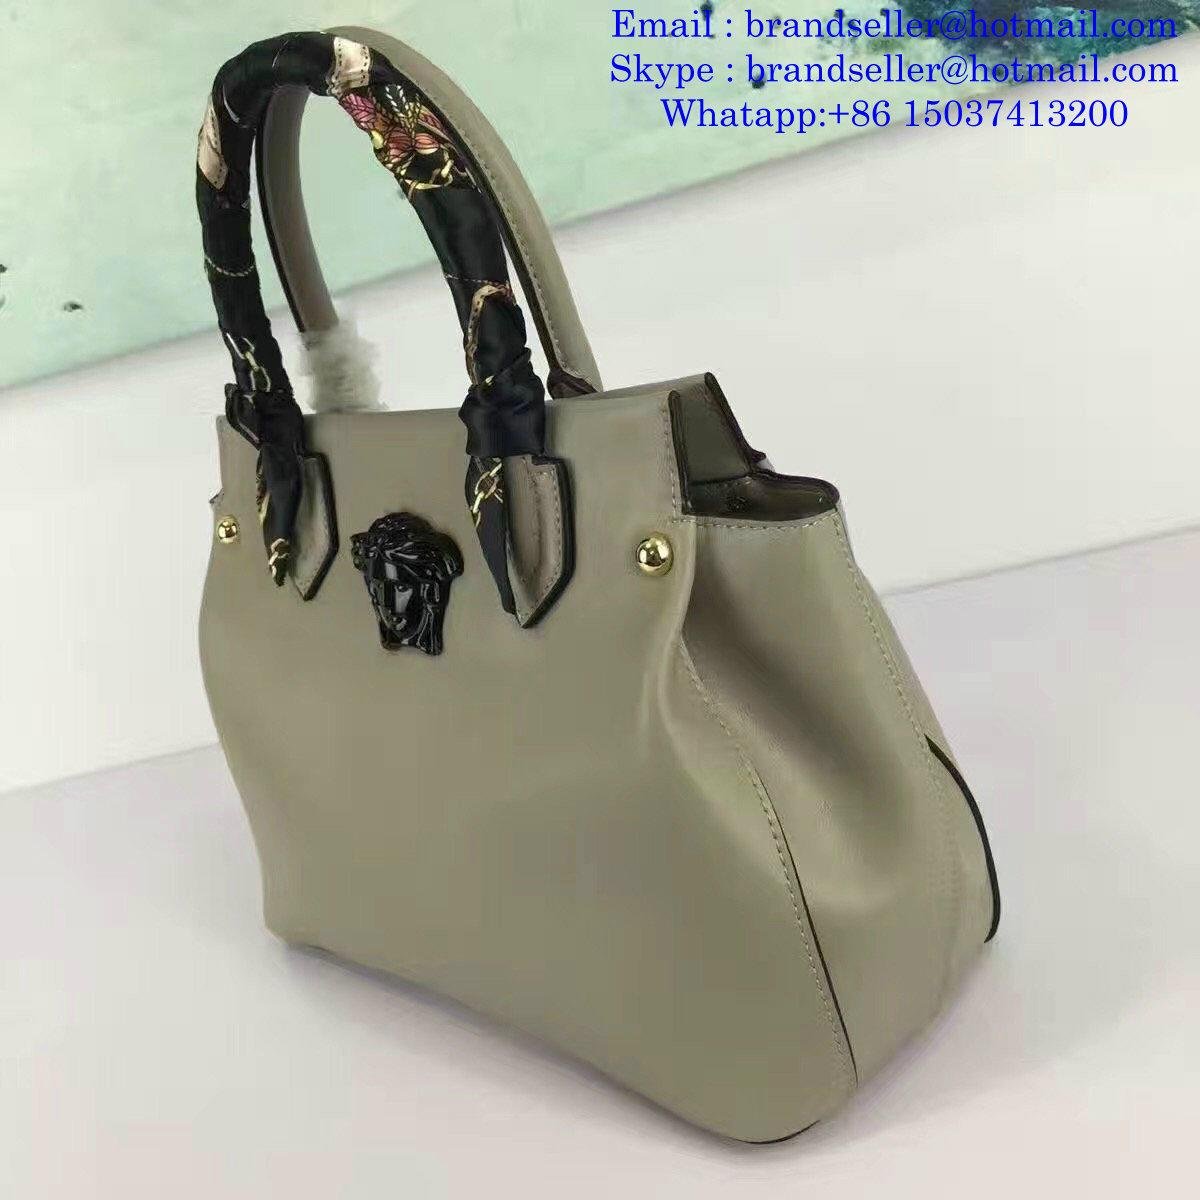 Versace Bags Leather Handbags lady bag for Women on Sale (China Trading Company) - Handbags ...